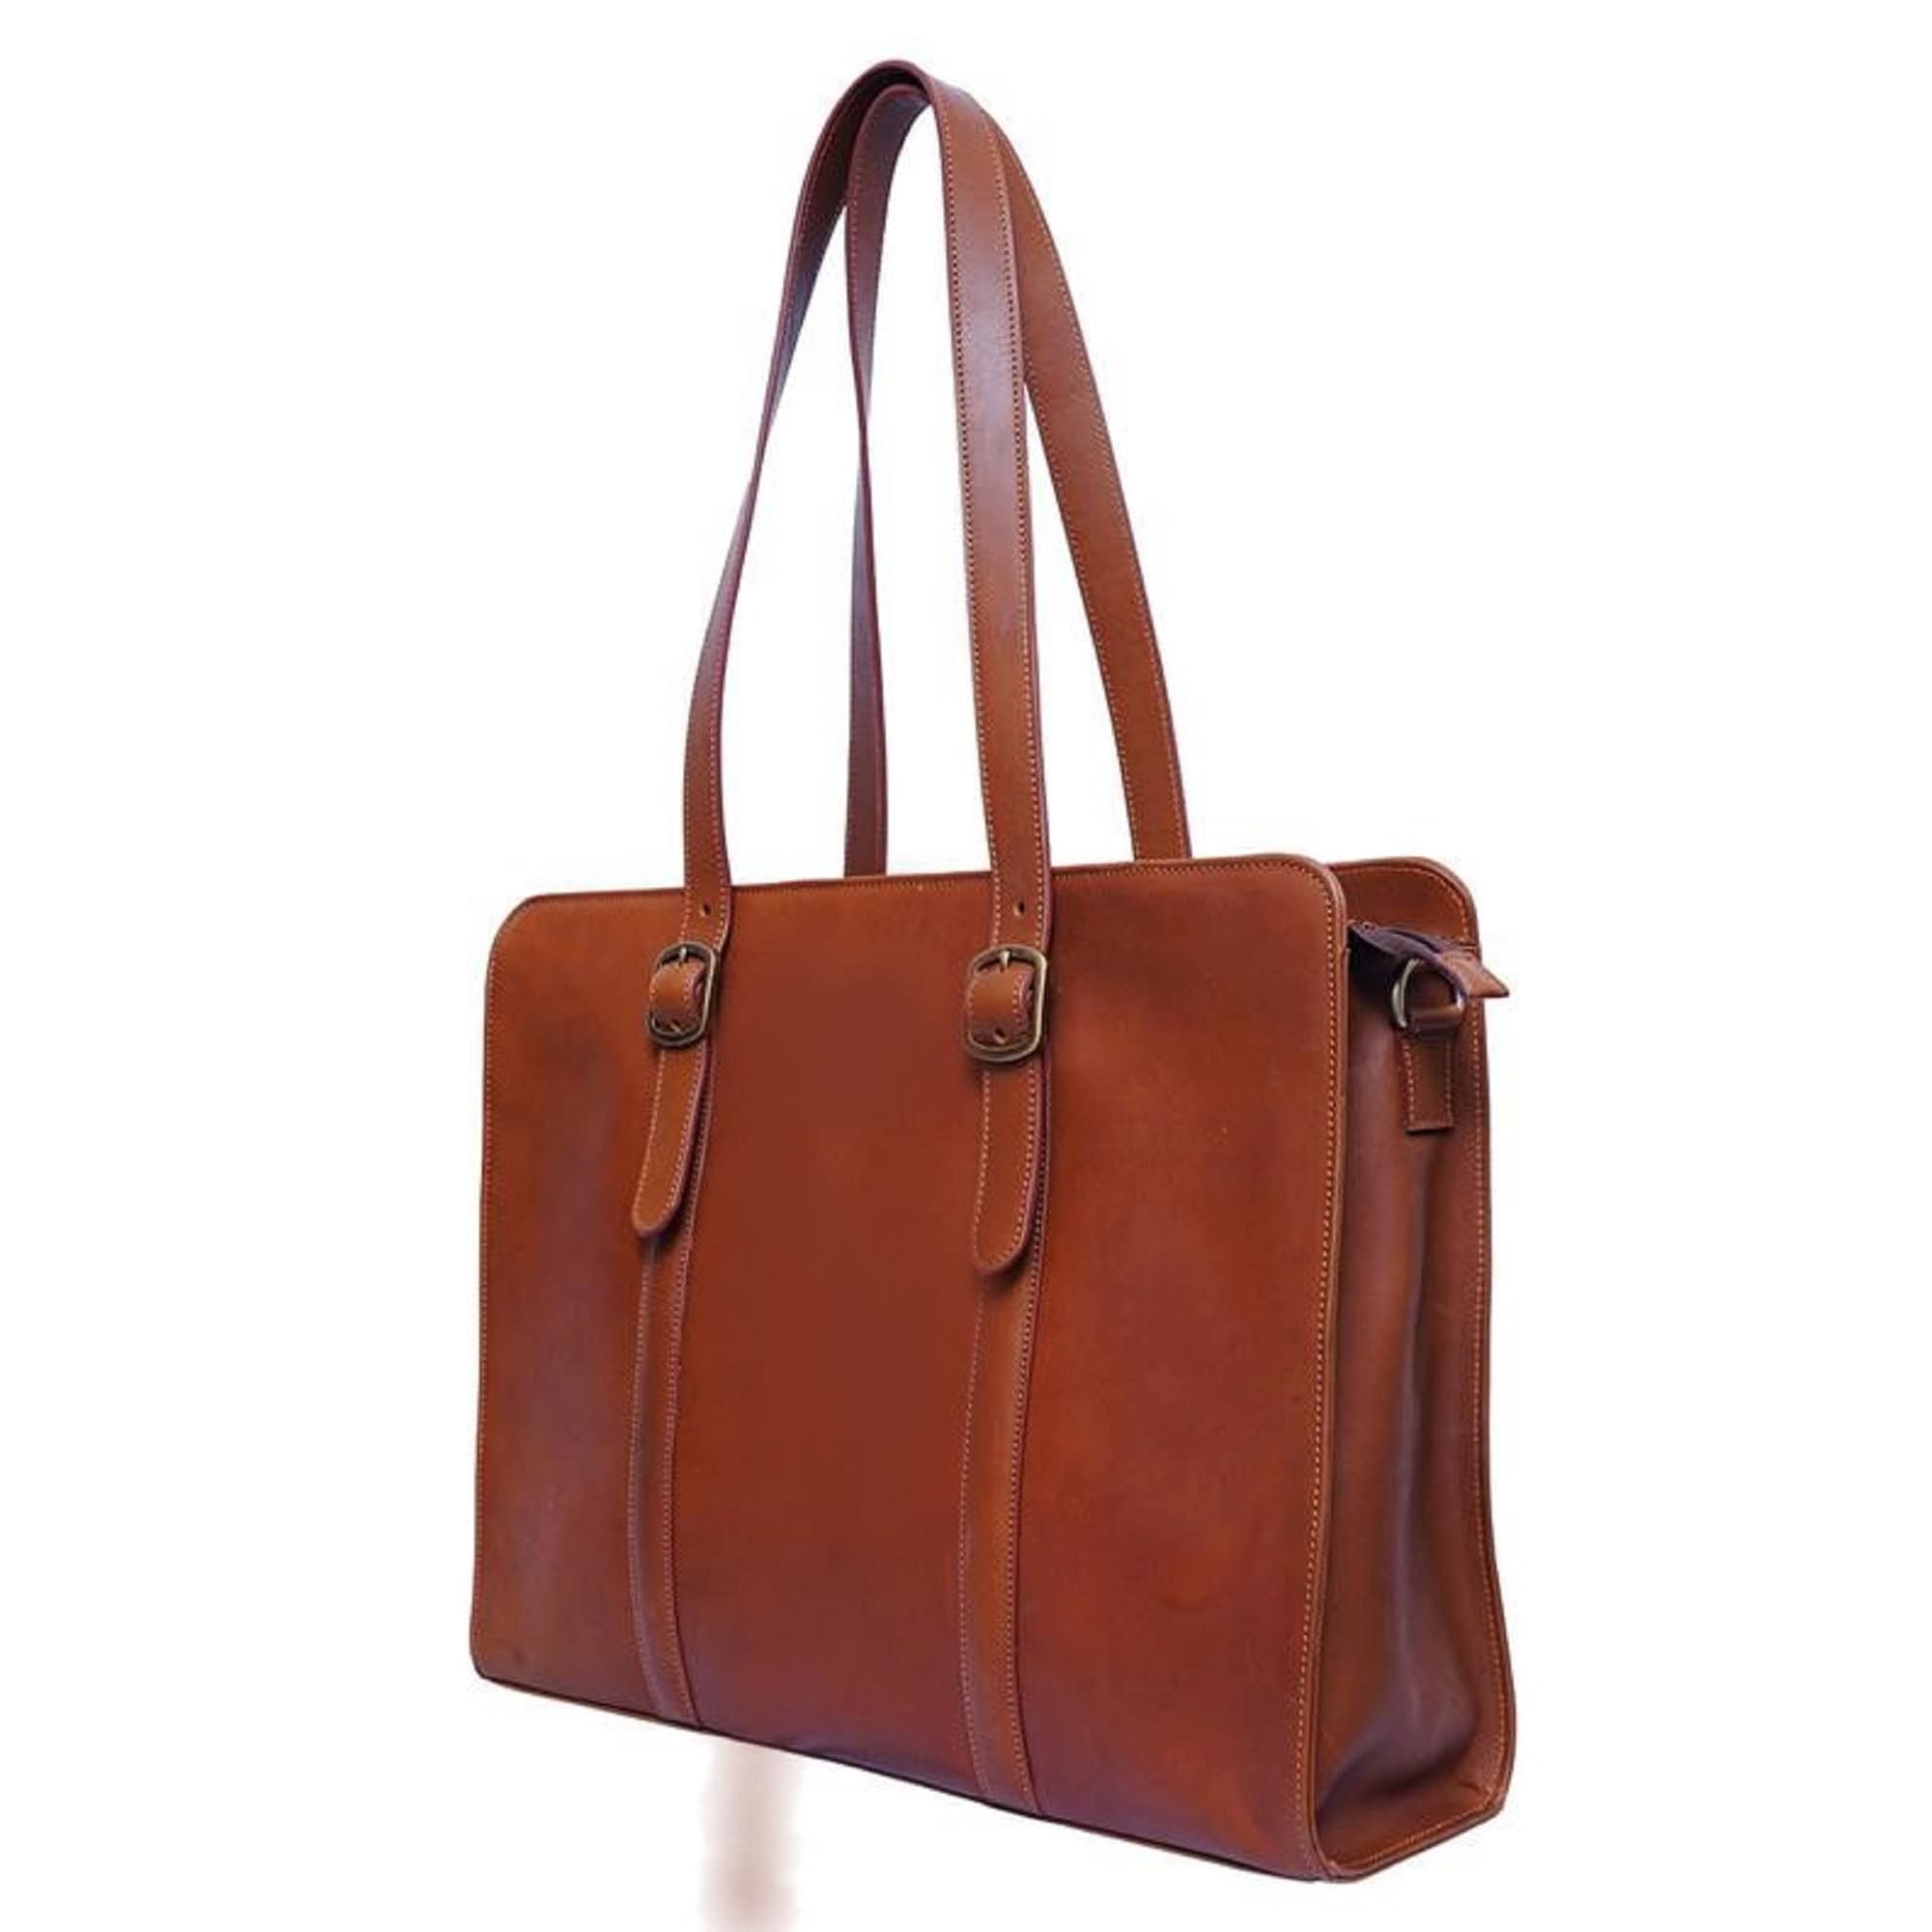 Pexas women's Genuine leather shoulder bags Ladies laptop | Etsy